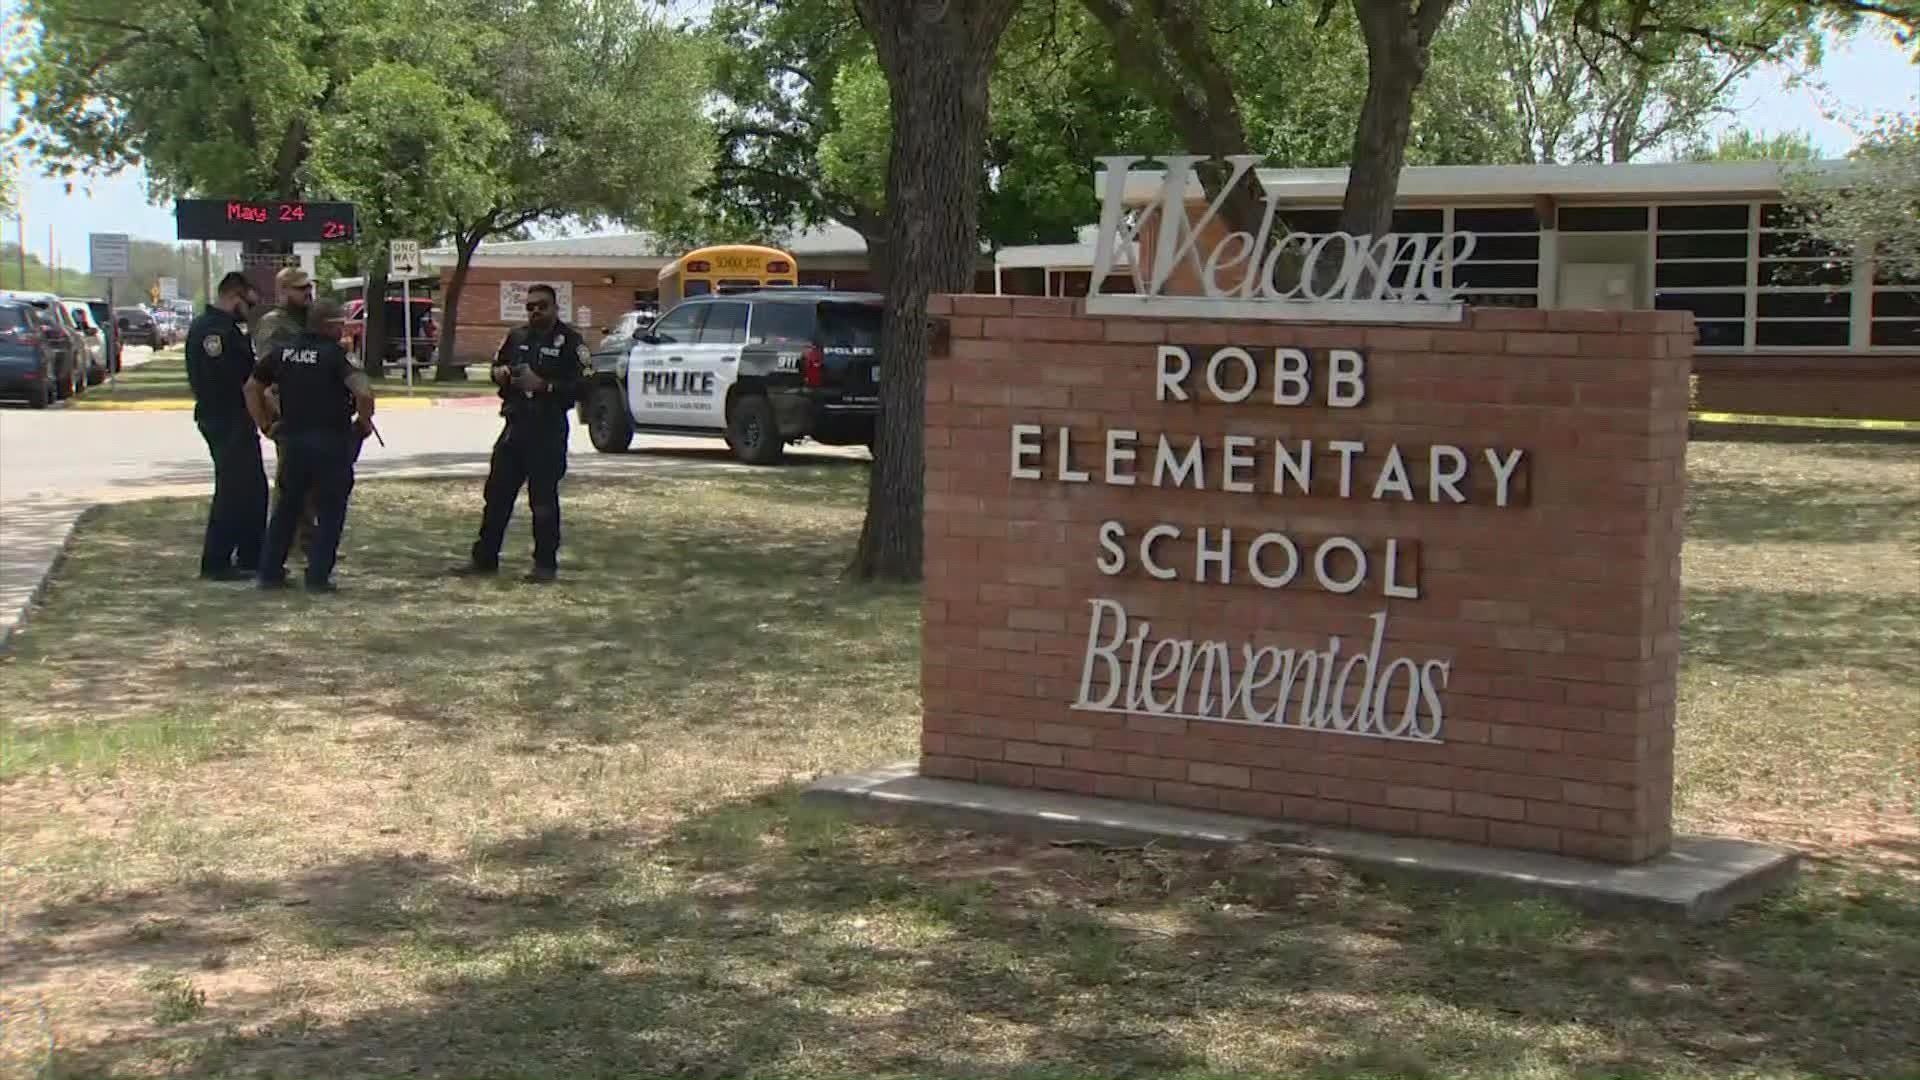 “No hubo advertencia”: gobernador revela detalles sobre la masacre escolar en Texas